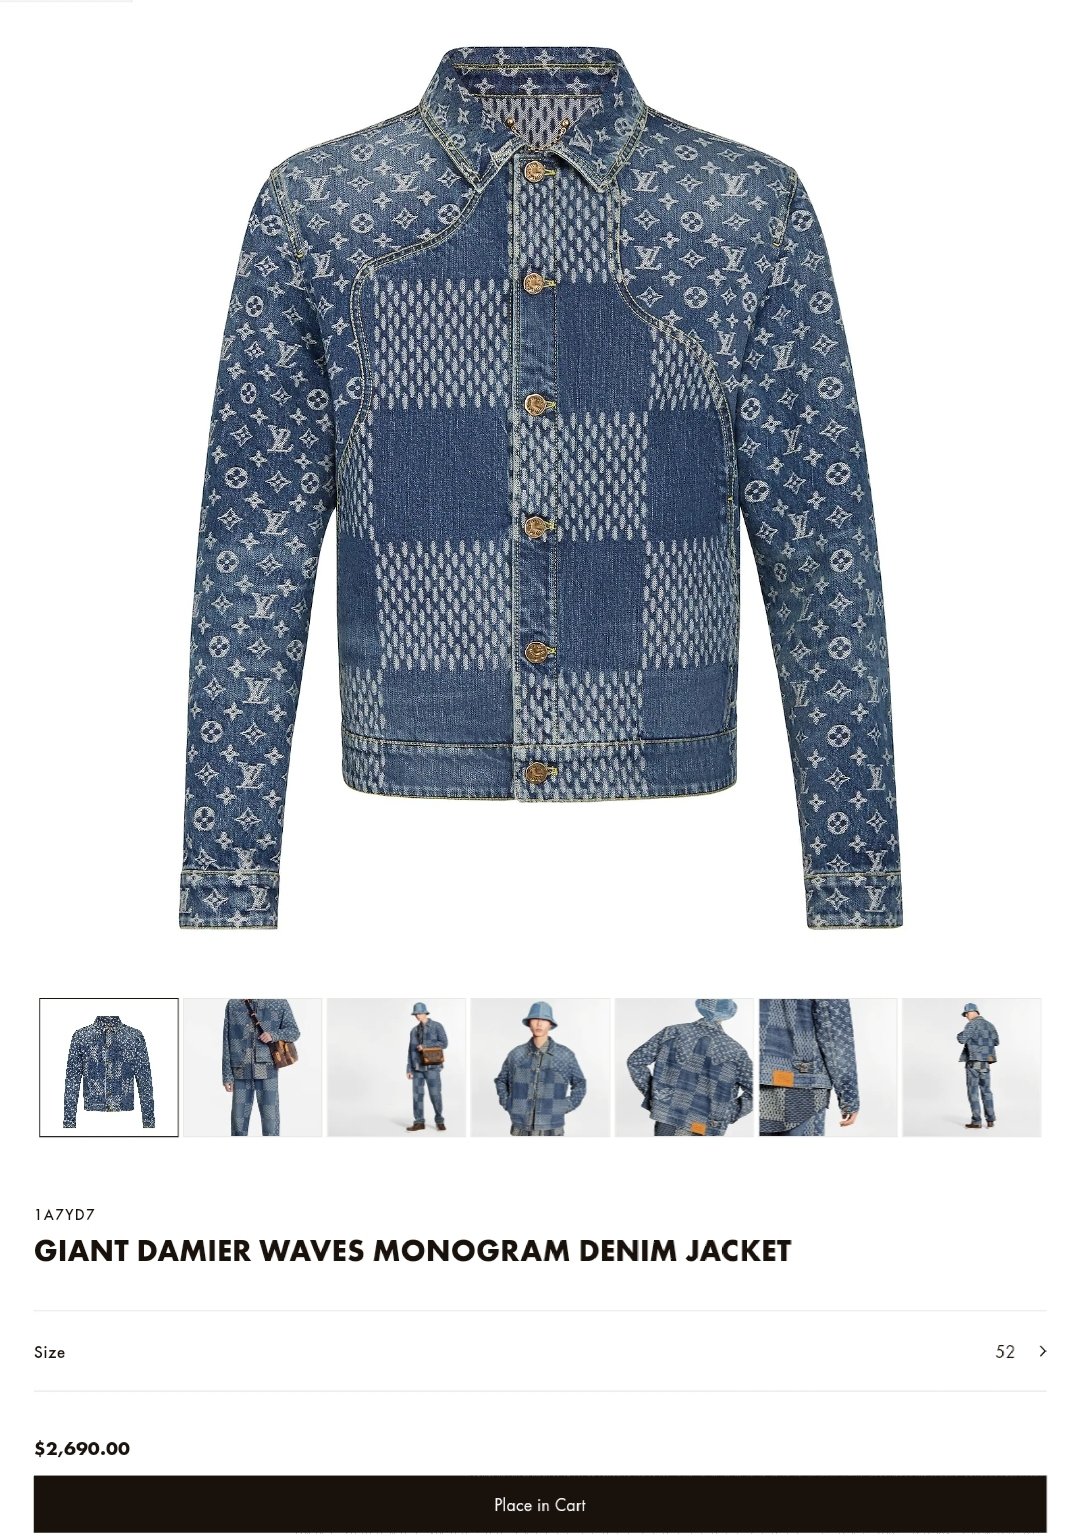 Tess 🧡 on X: [JACOB] Louis Vuitton's Giant Damier Waves Monogram Denim  Jacket designed by Nigo (Nigo x Virgil Abloh LV² Collection 2020) - $2,690  #VAV #브이에이브이 #VAVFashion #VAVStyle  / X